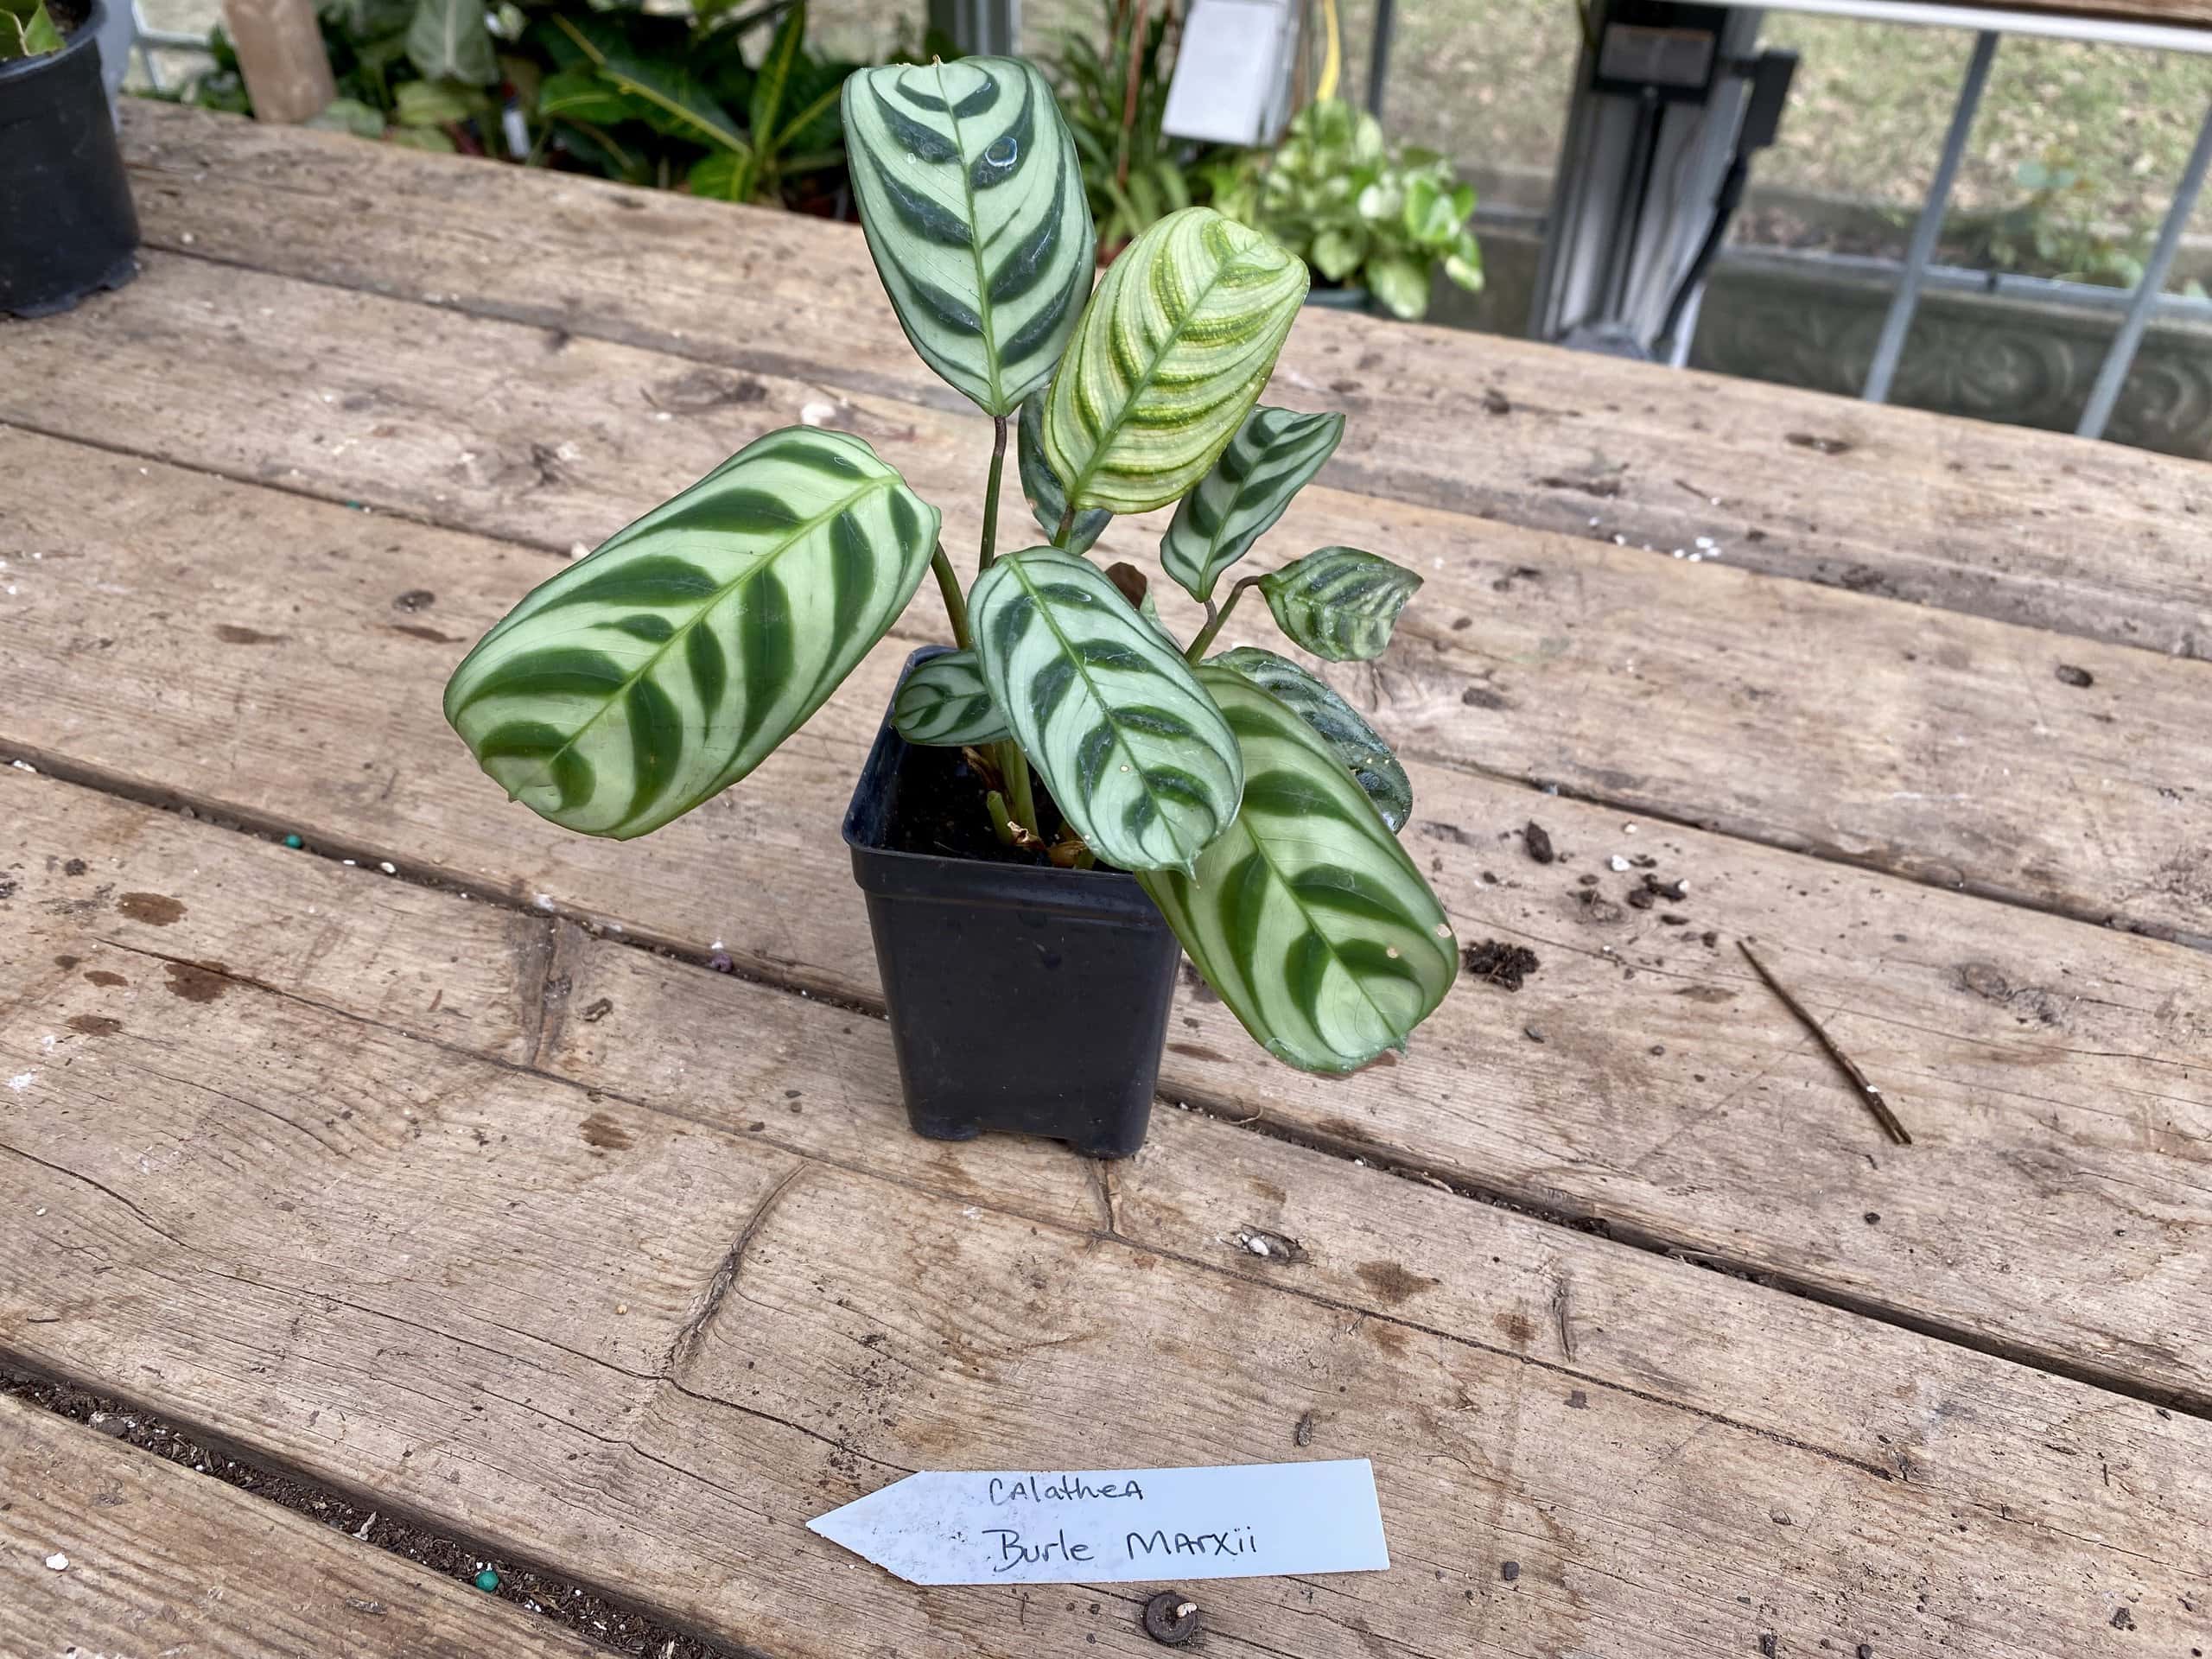 Calathea Burle Marxii 2.5 Inch Tall Pot Live Plant